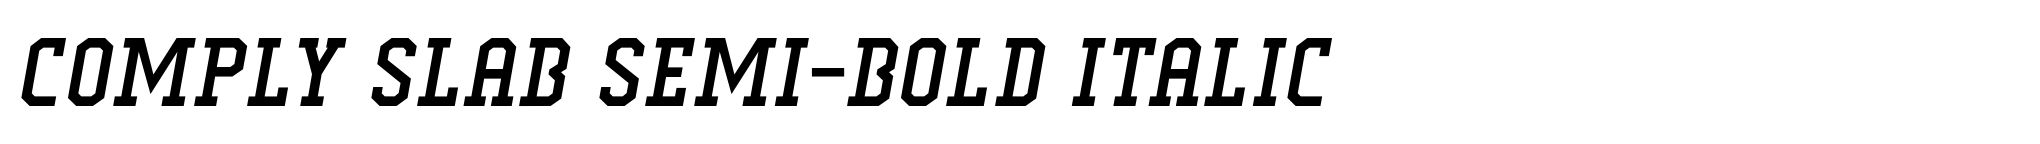 Comply Slab Semi-Bold Italic image